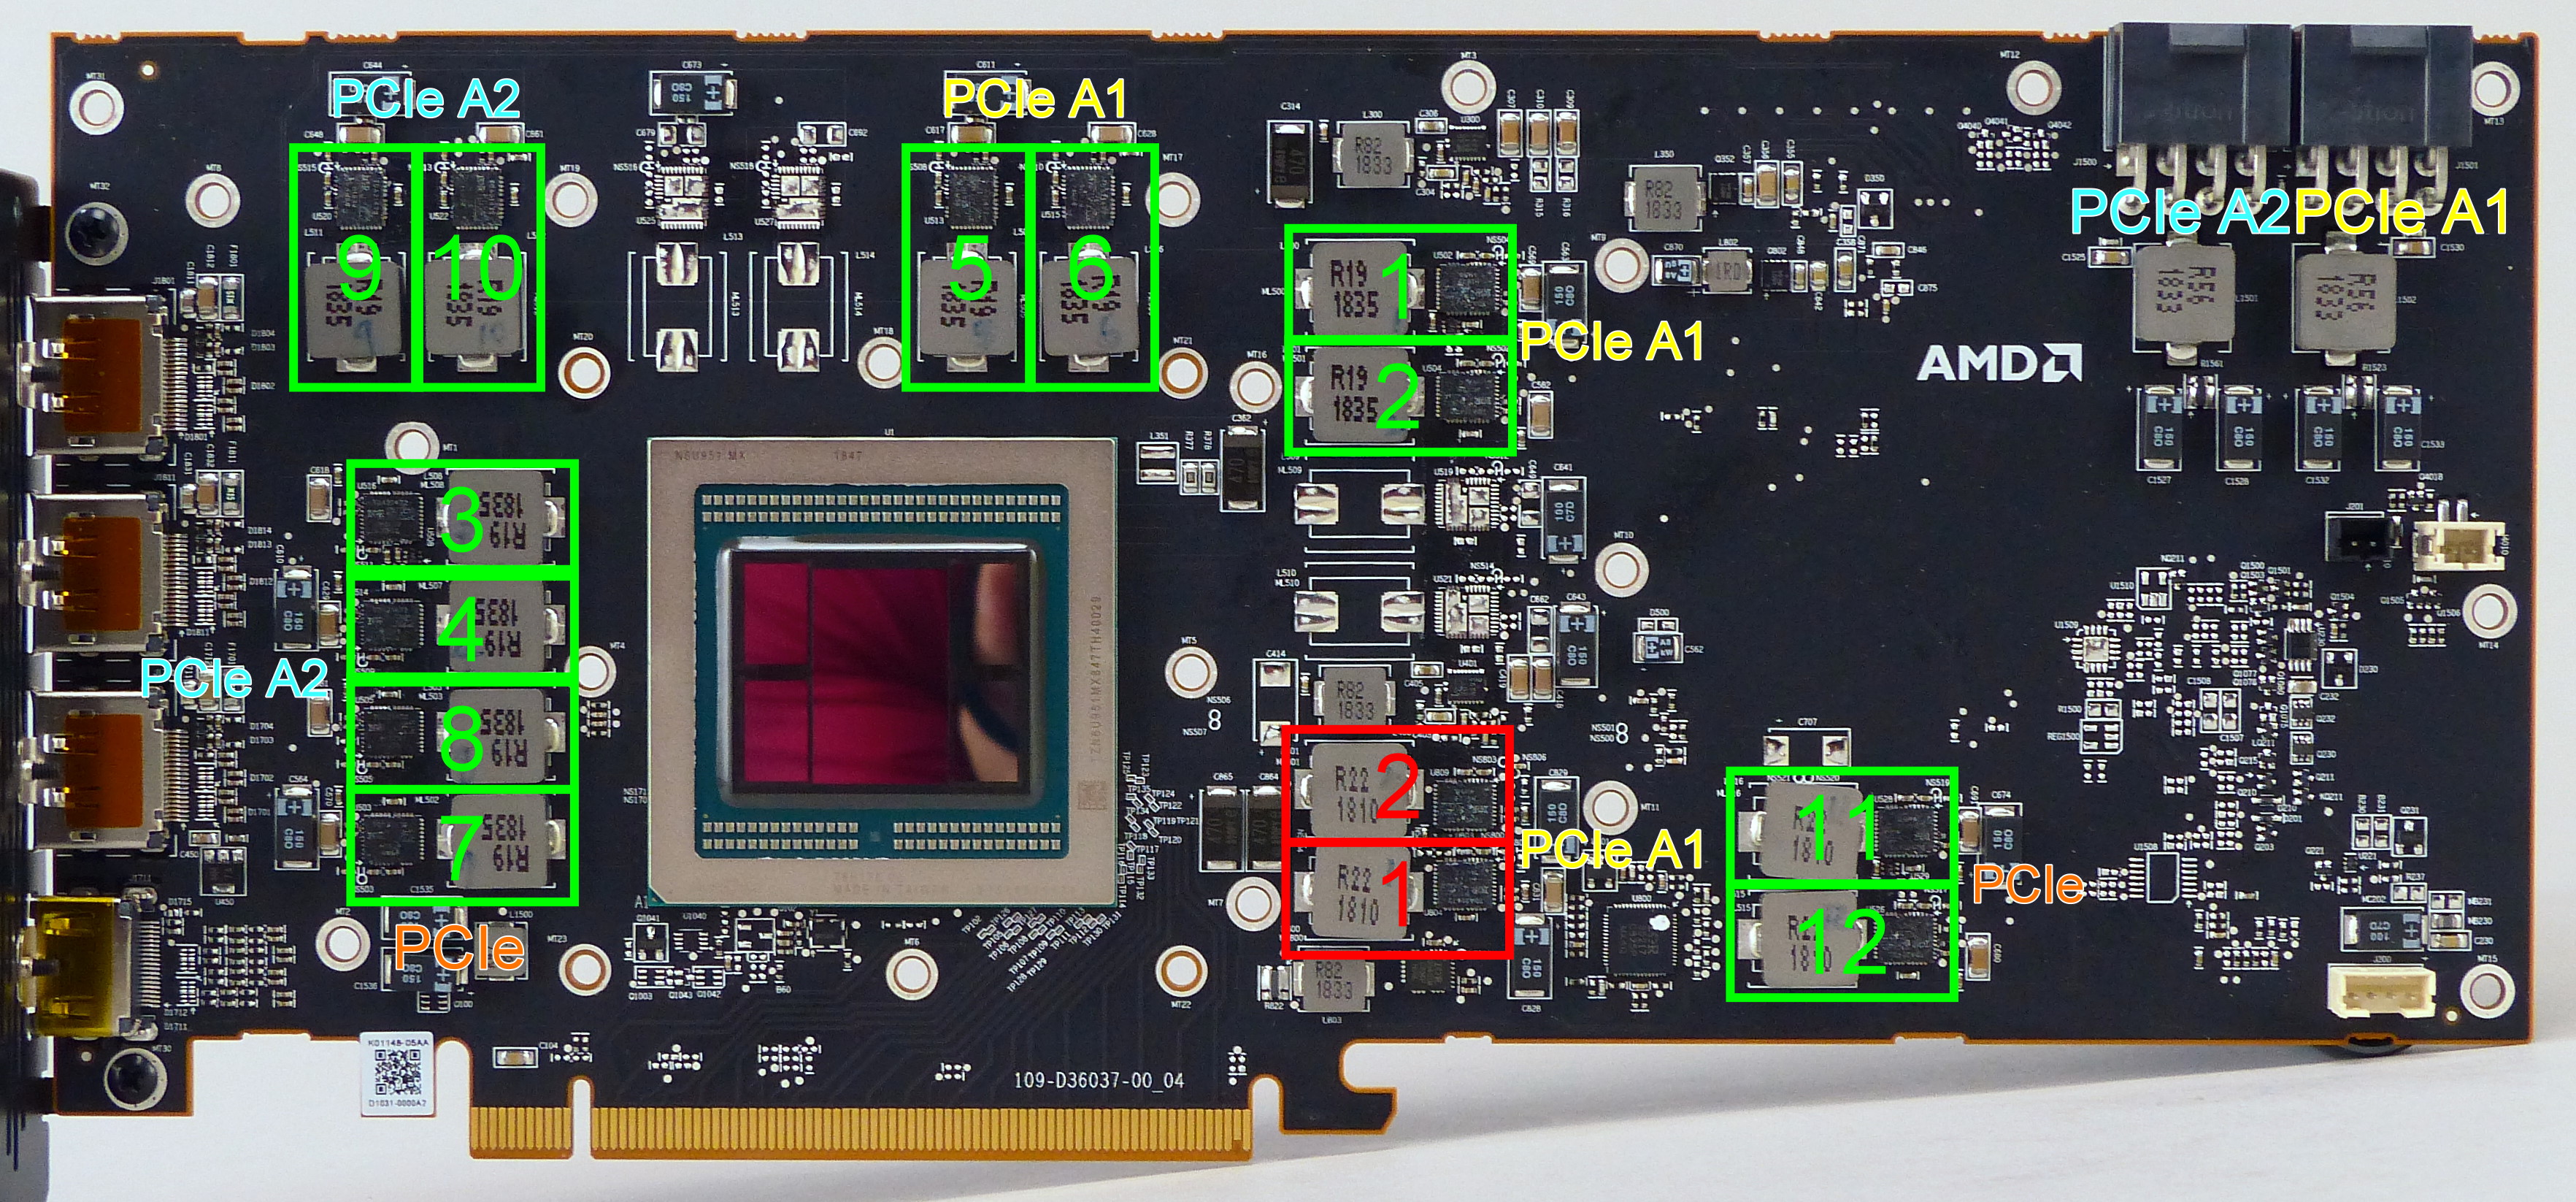 Radeon VII 顯示卡顯示晶片與記憶體主要供電規模相數，與電力來源示意圖（綠色給提供顯示晶片，紅色提供給記憶體